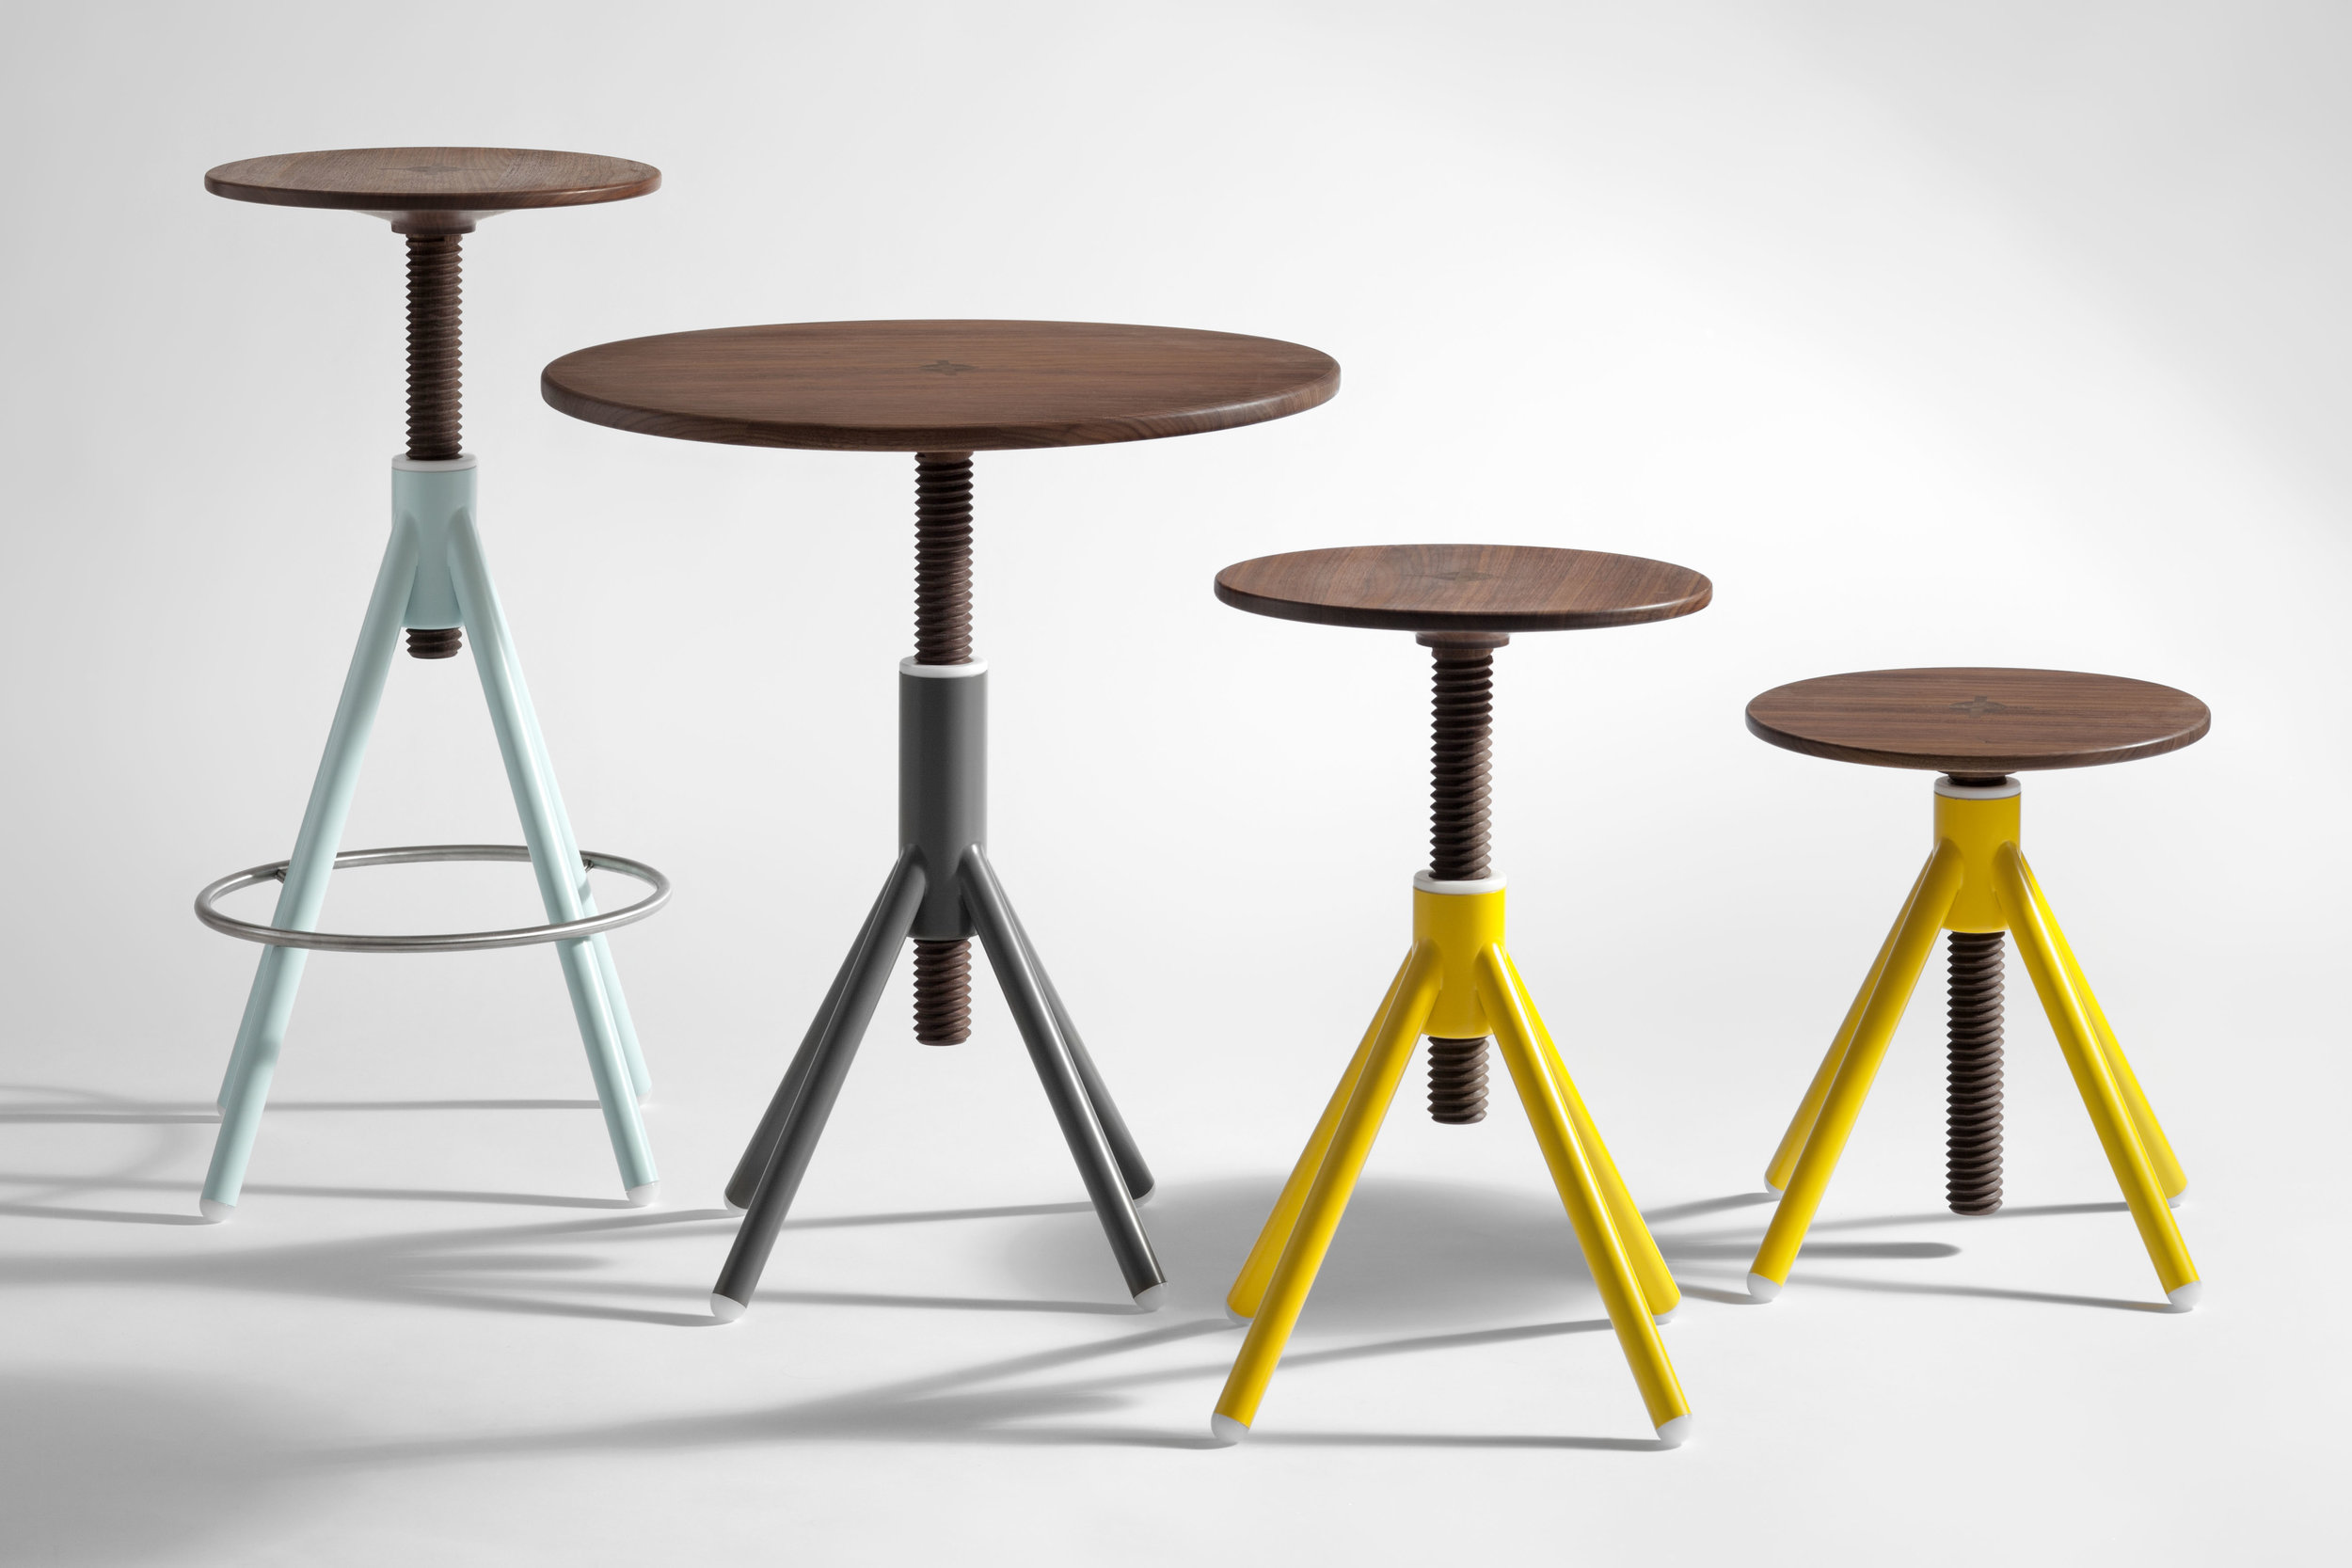 04_thread-family-stool_furniture-design_coordination-berlin.jpg